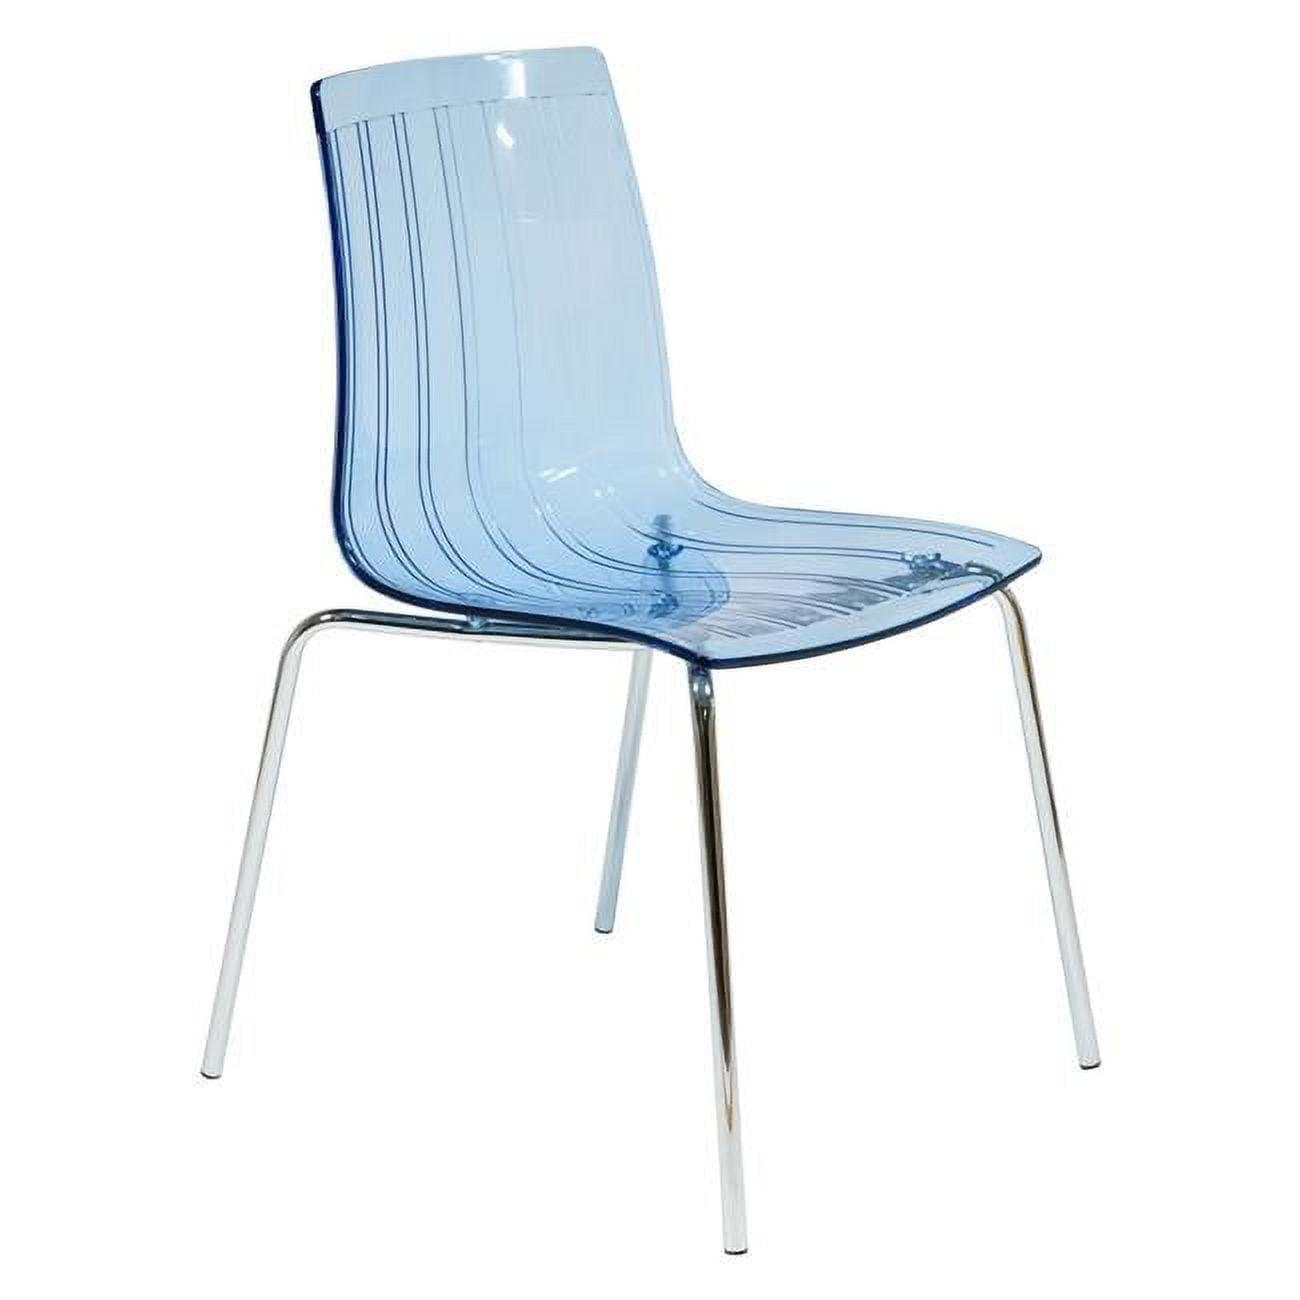 LeisureMod Ralph Transparent Blue Plastic Dining Chair with Chrome Legs